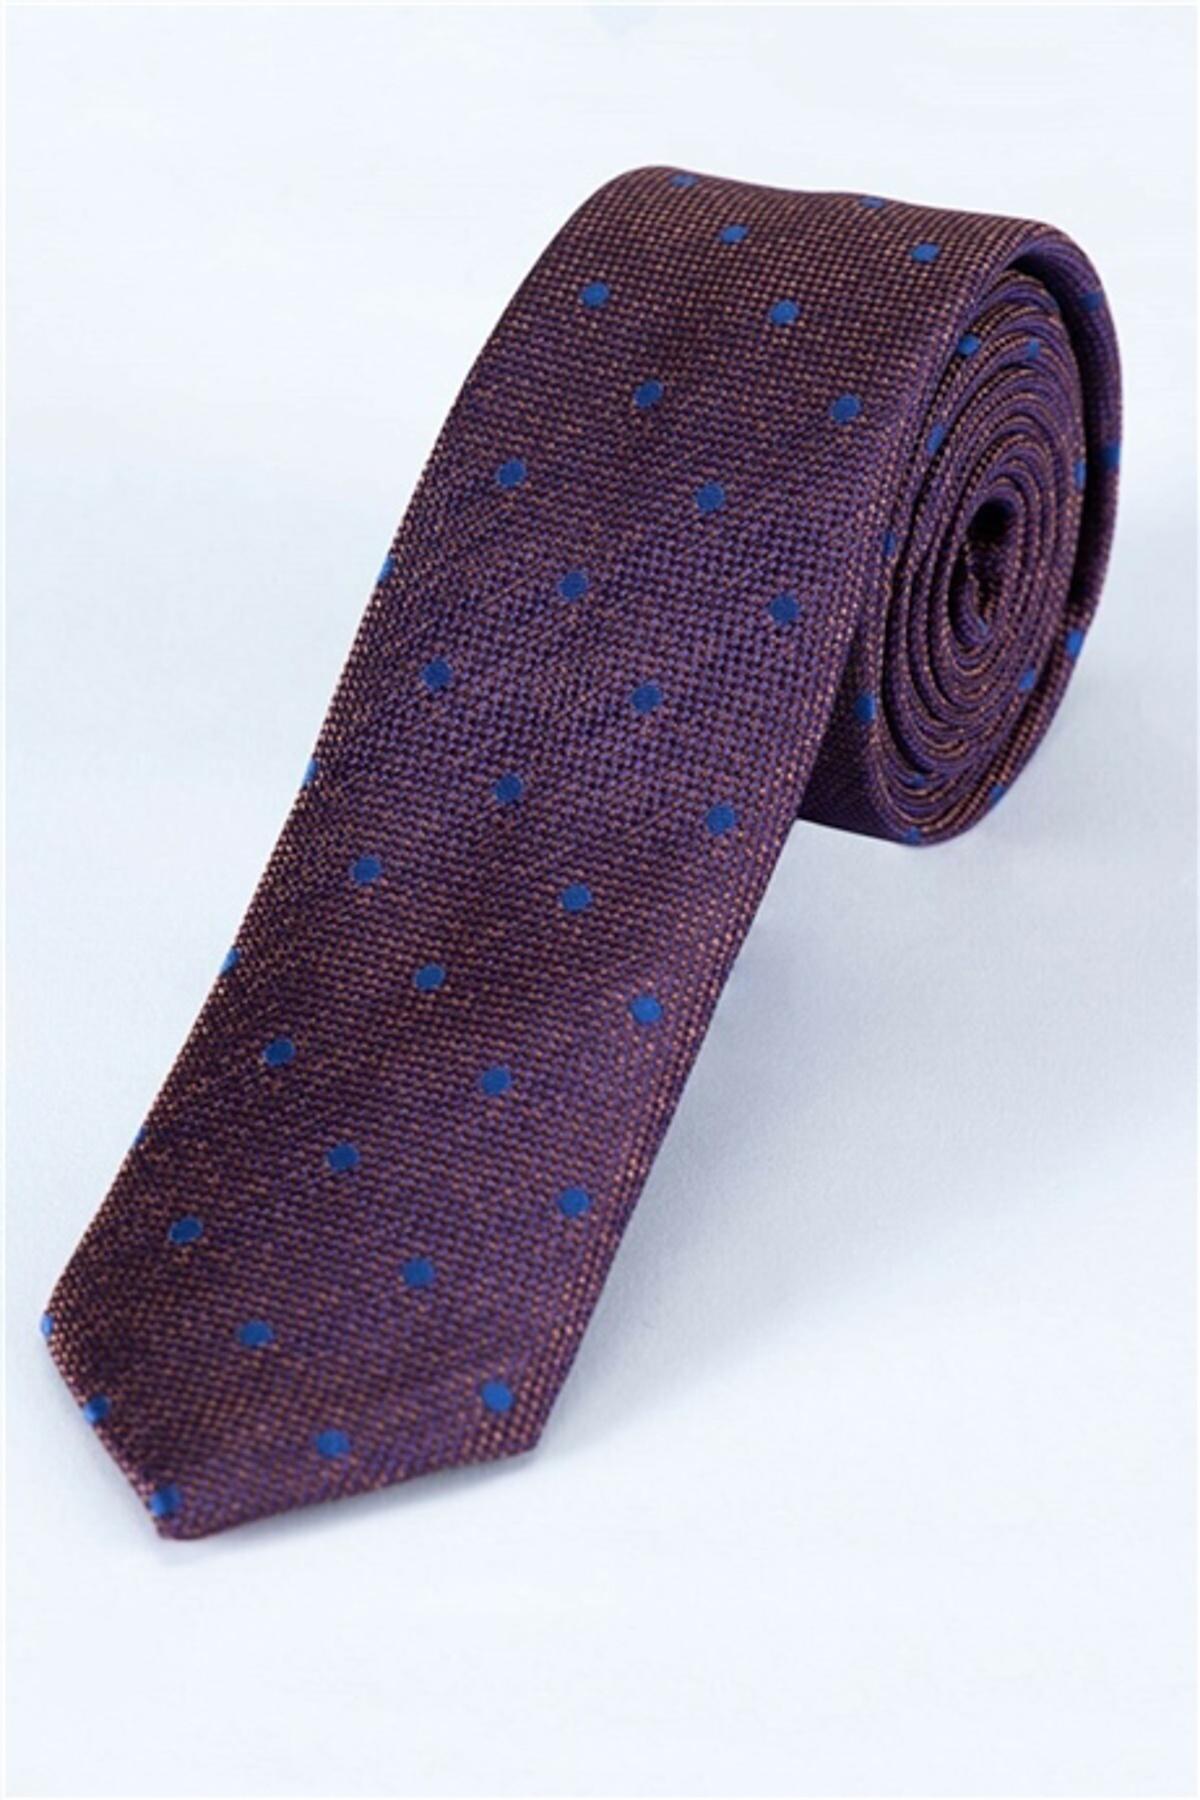 Selected image for TUDORS Uža kravata smeđa